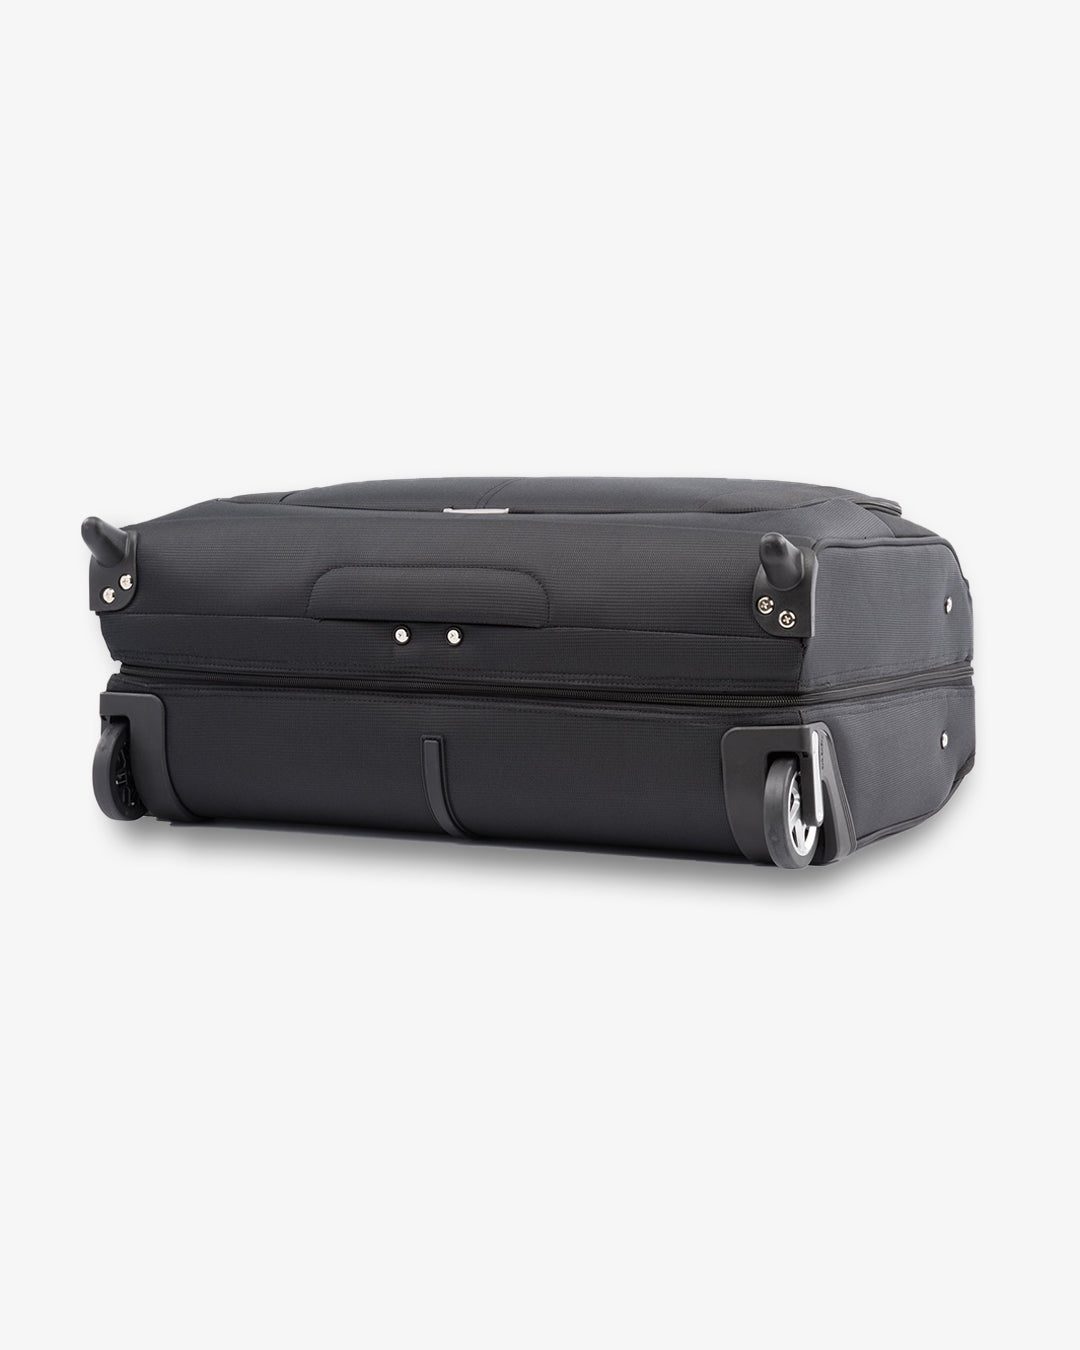 Travelpro Maxlite® 5 Rolling Garment Bag (CARRY-ON)